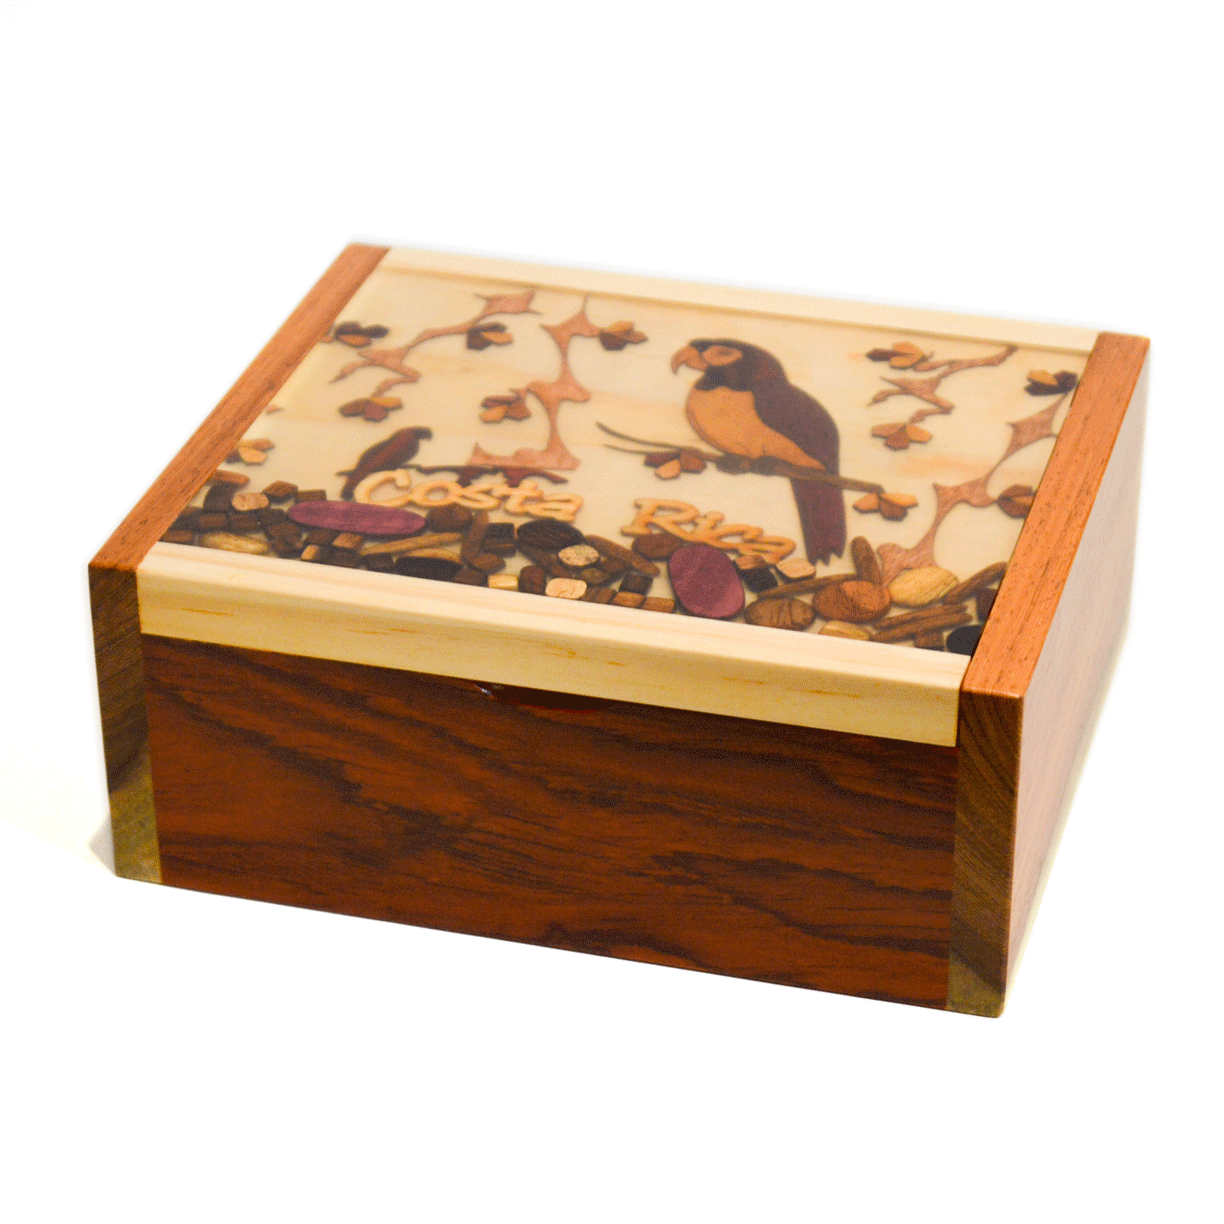 Wooden tea box 4 divisions - Wood design resin Parrot